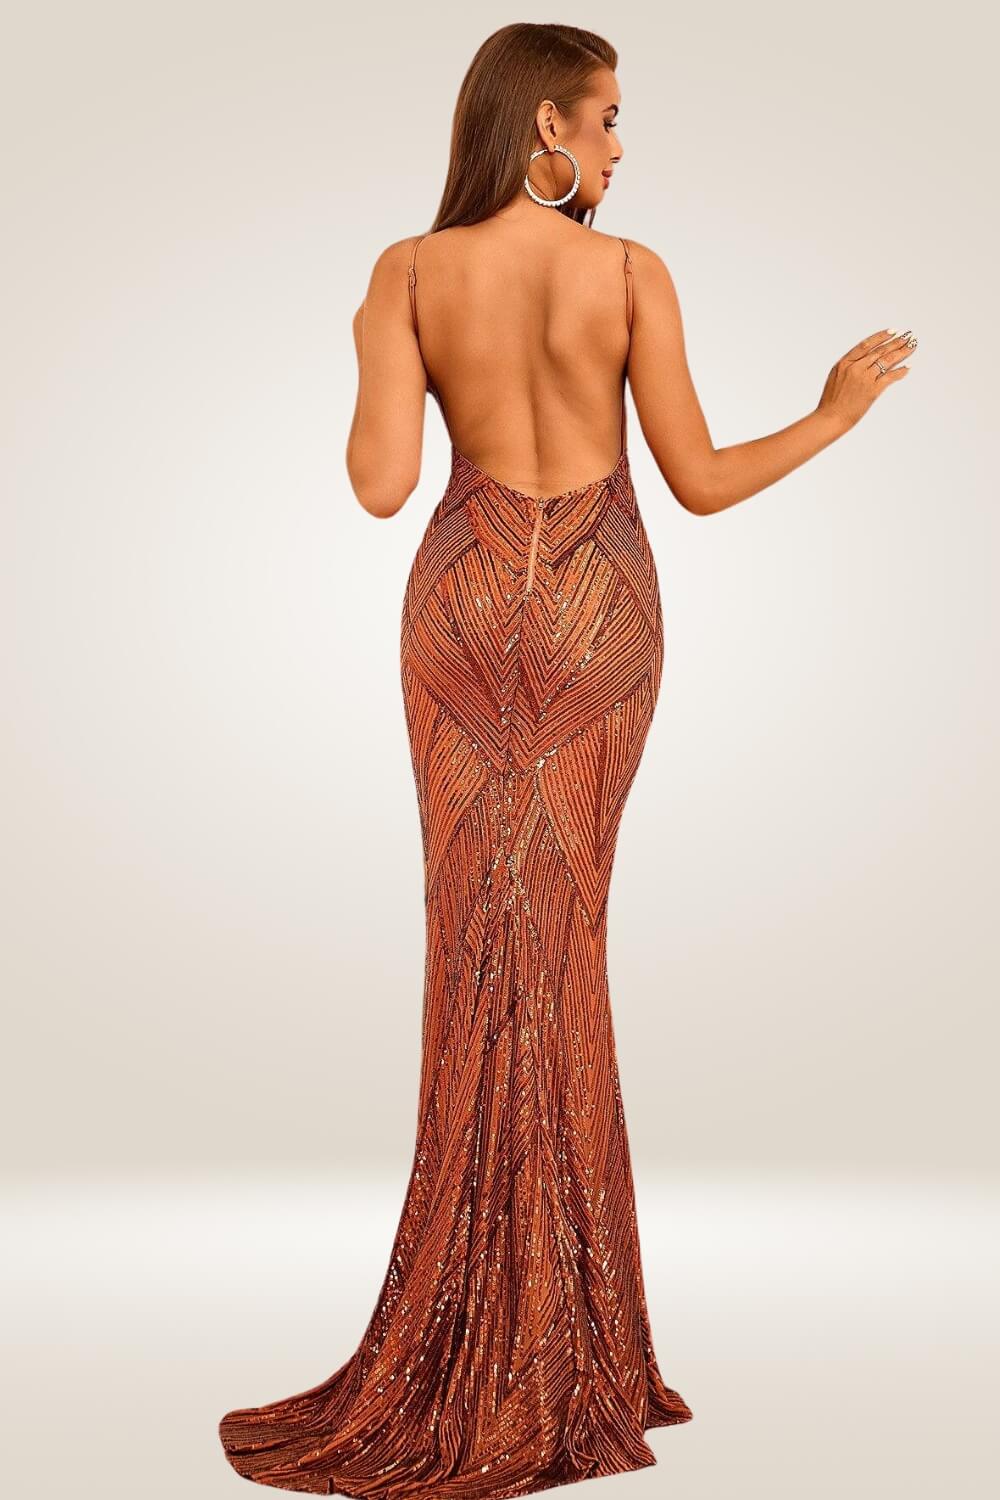 Geometric Sequin Copper Orange Maxi Dress - TGC Boutique - maxi dress